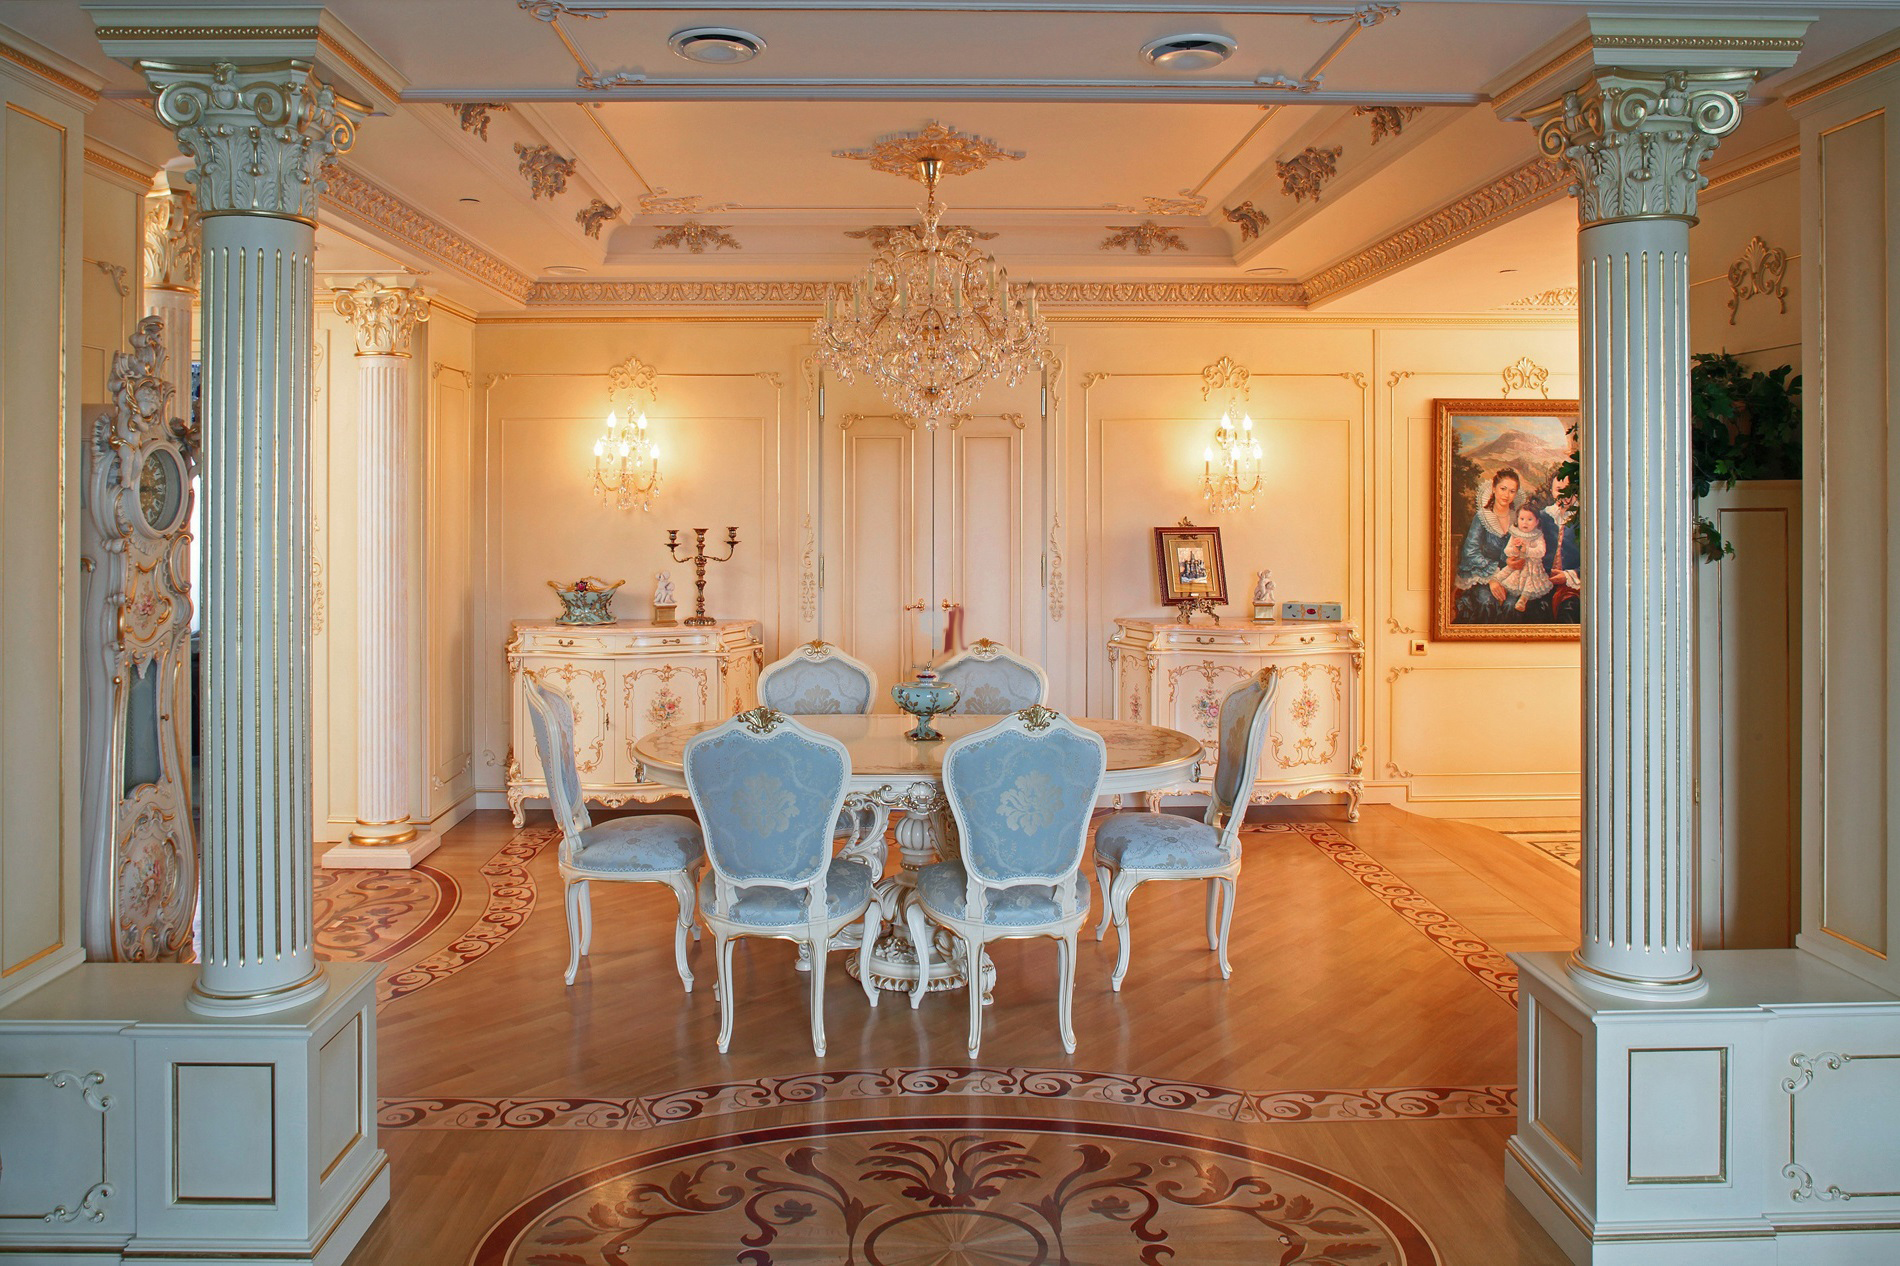 bright baroque style kitchen interior